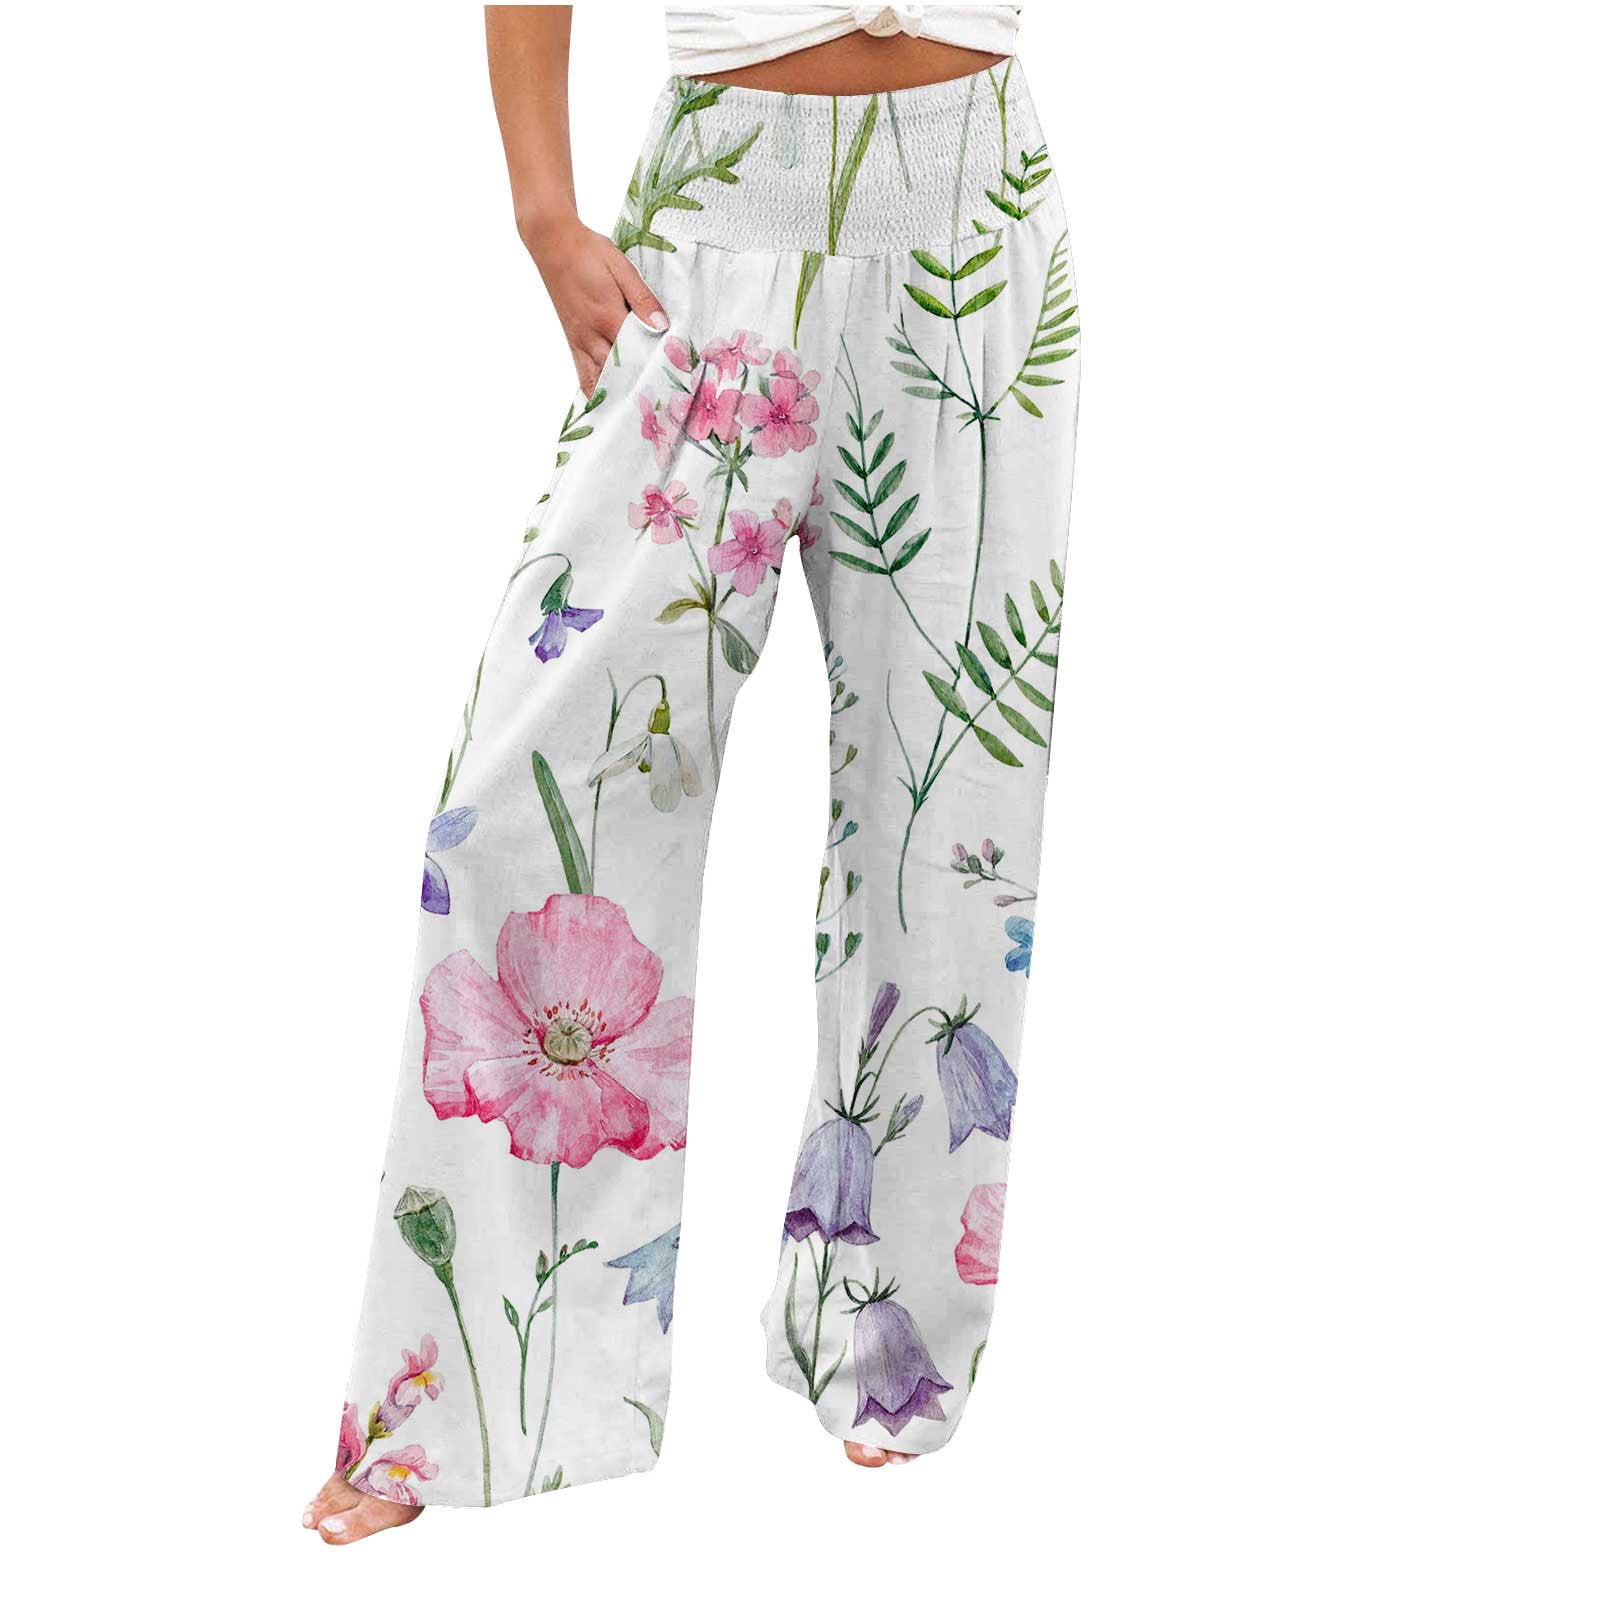 KIHOUT Women's Comfortable Printed High Waist Leisure Pants Sweatpants Yoga  Pants